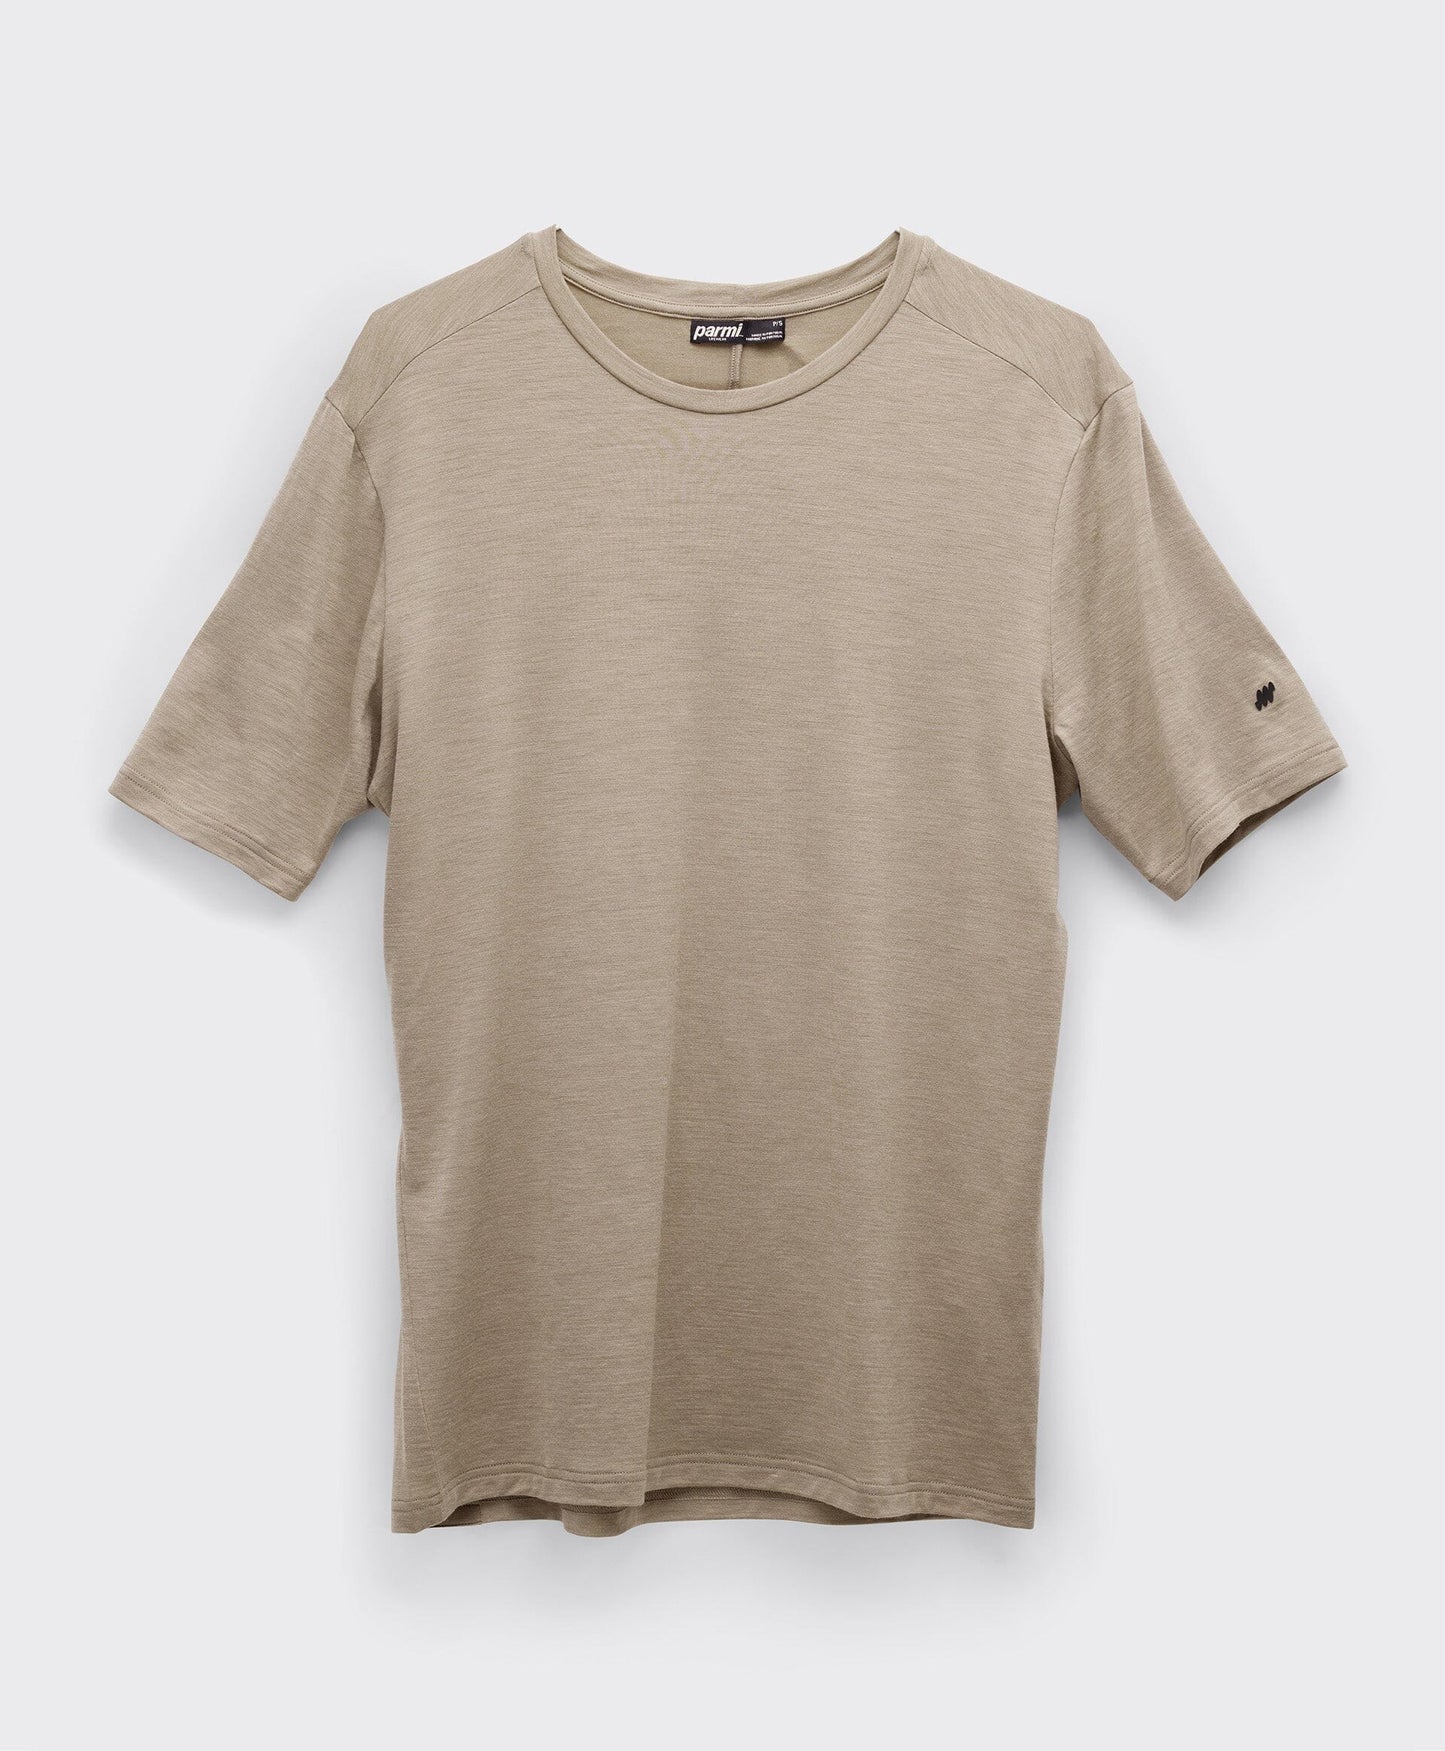 Parmi Lifewear - Merino Free Range Men's T-Shirts Parmi Scone L 